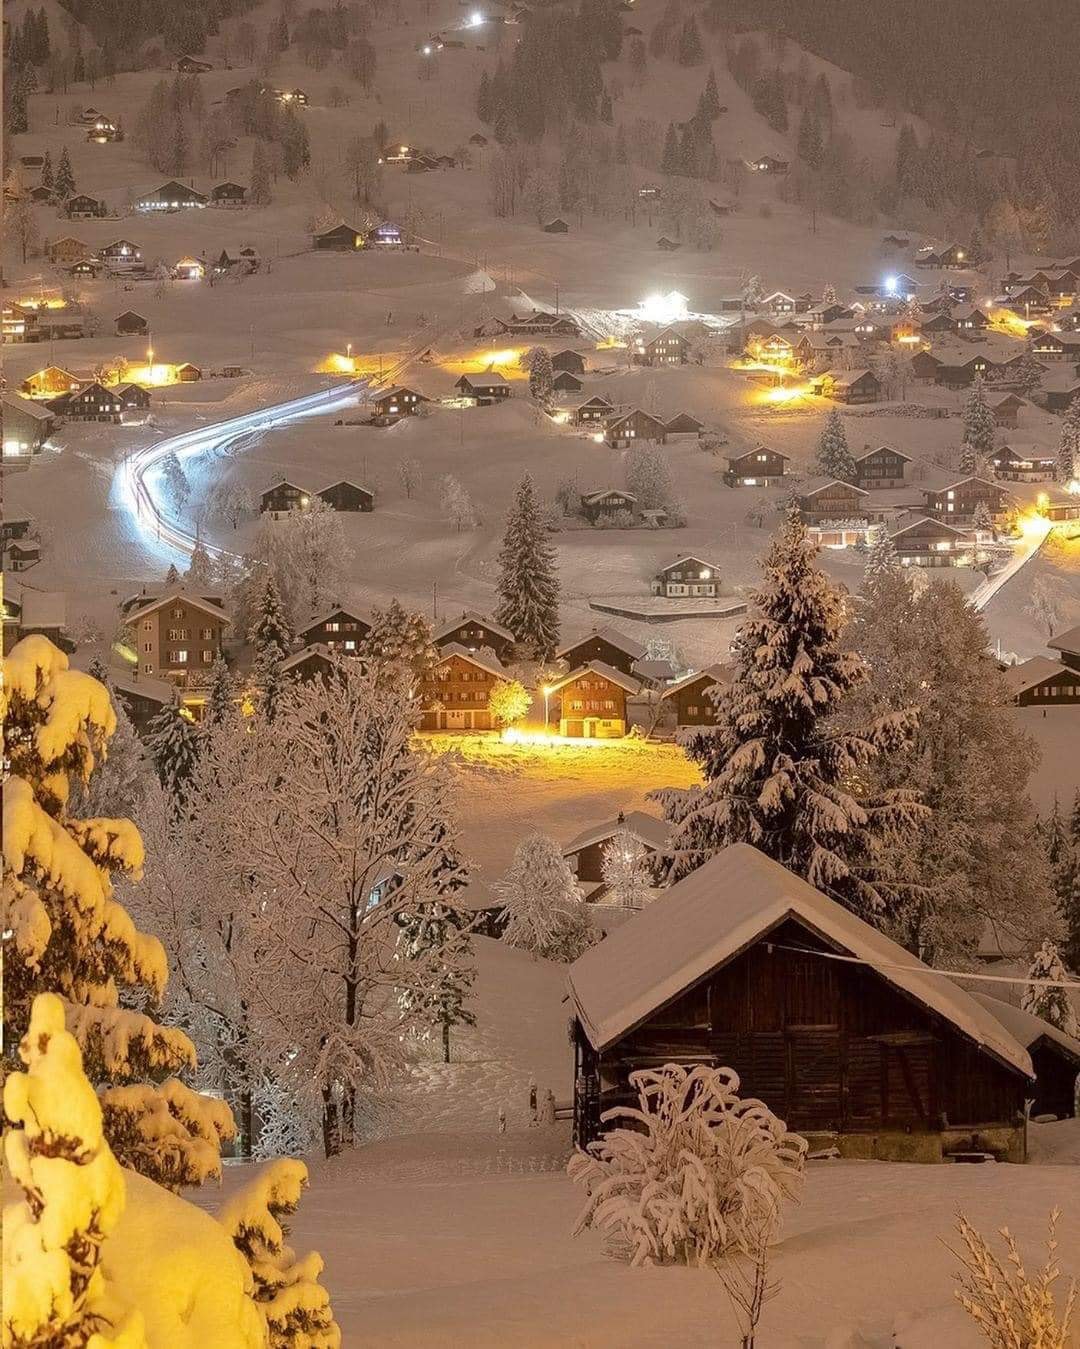 magical winter night In Switzerland.jpg